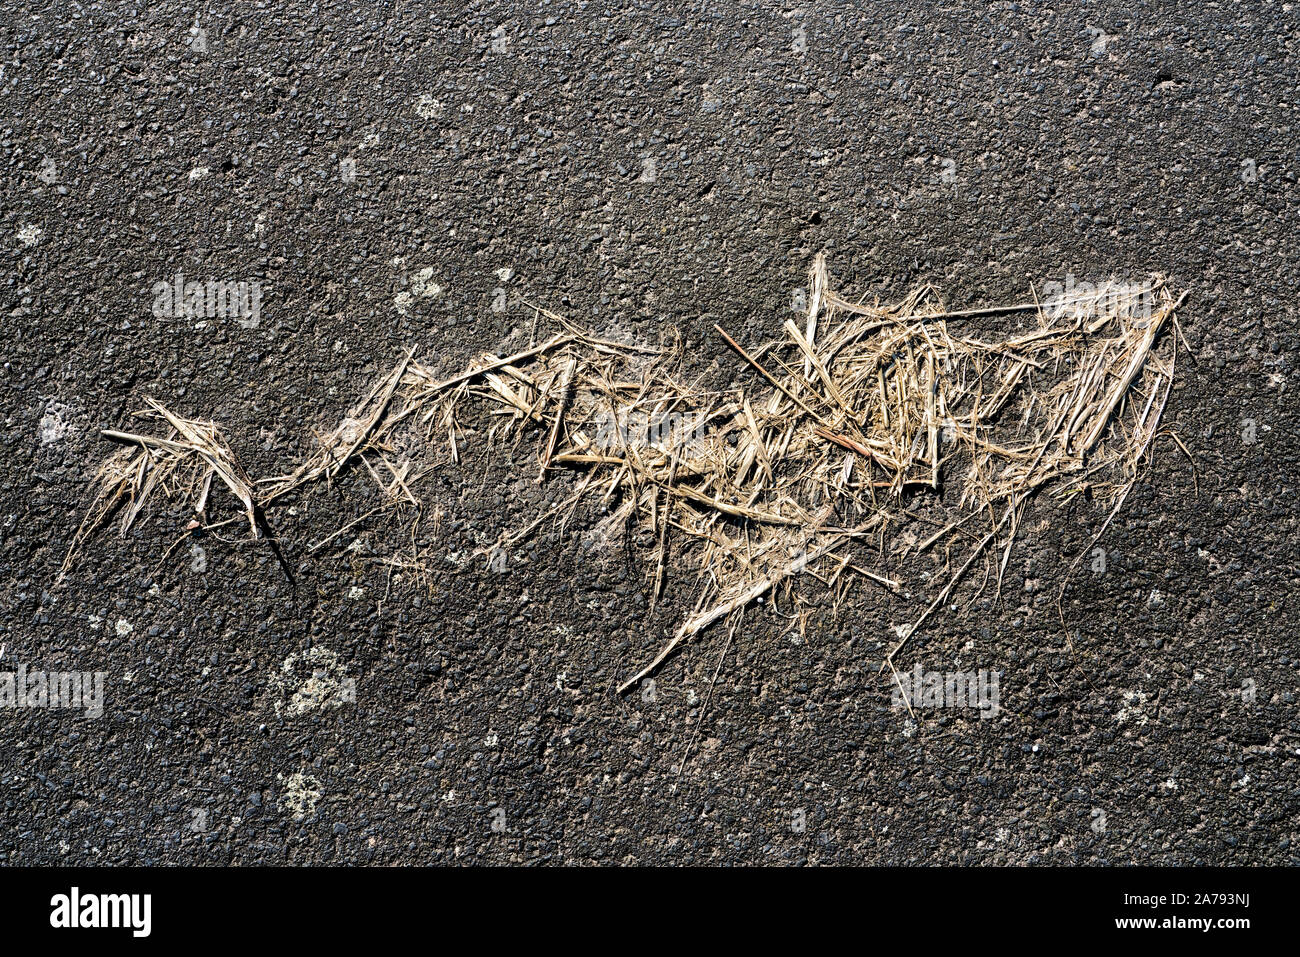 straw, old asphalt pavement Stock Photo